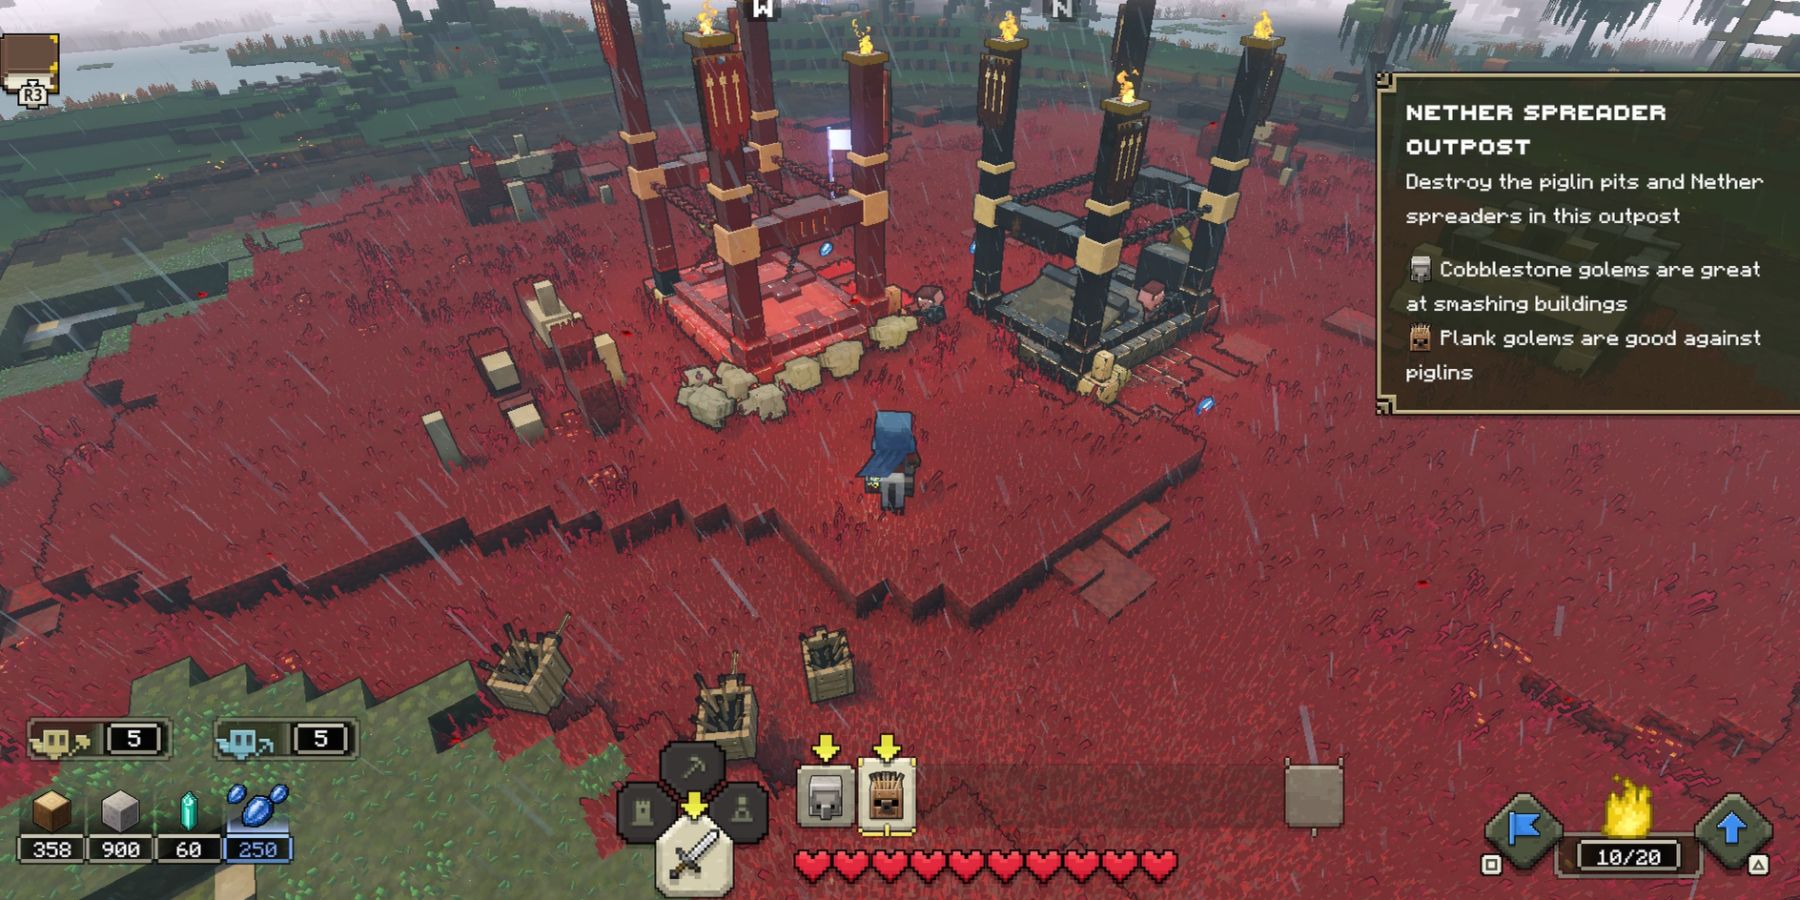 Destroying Piglin Outpost structures in Minecraft Legends